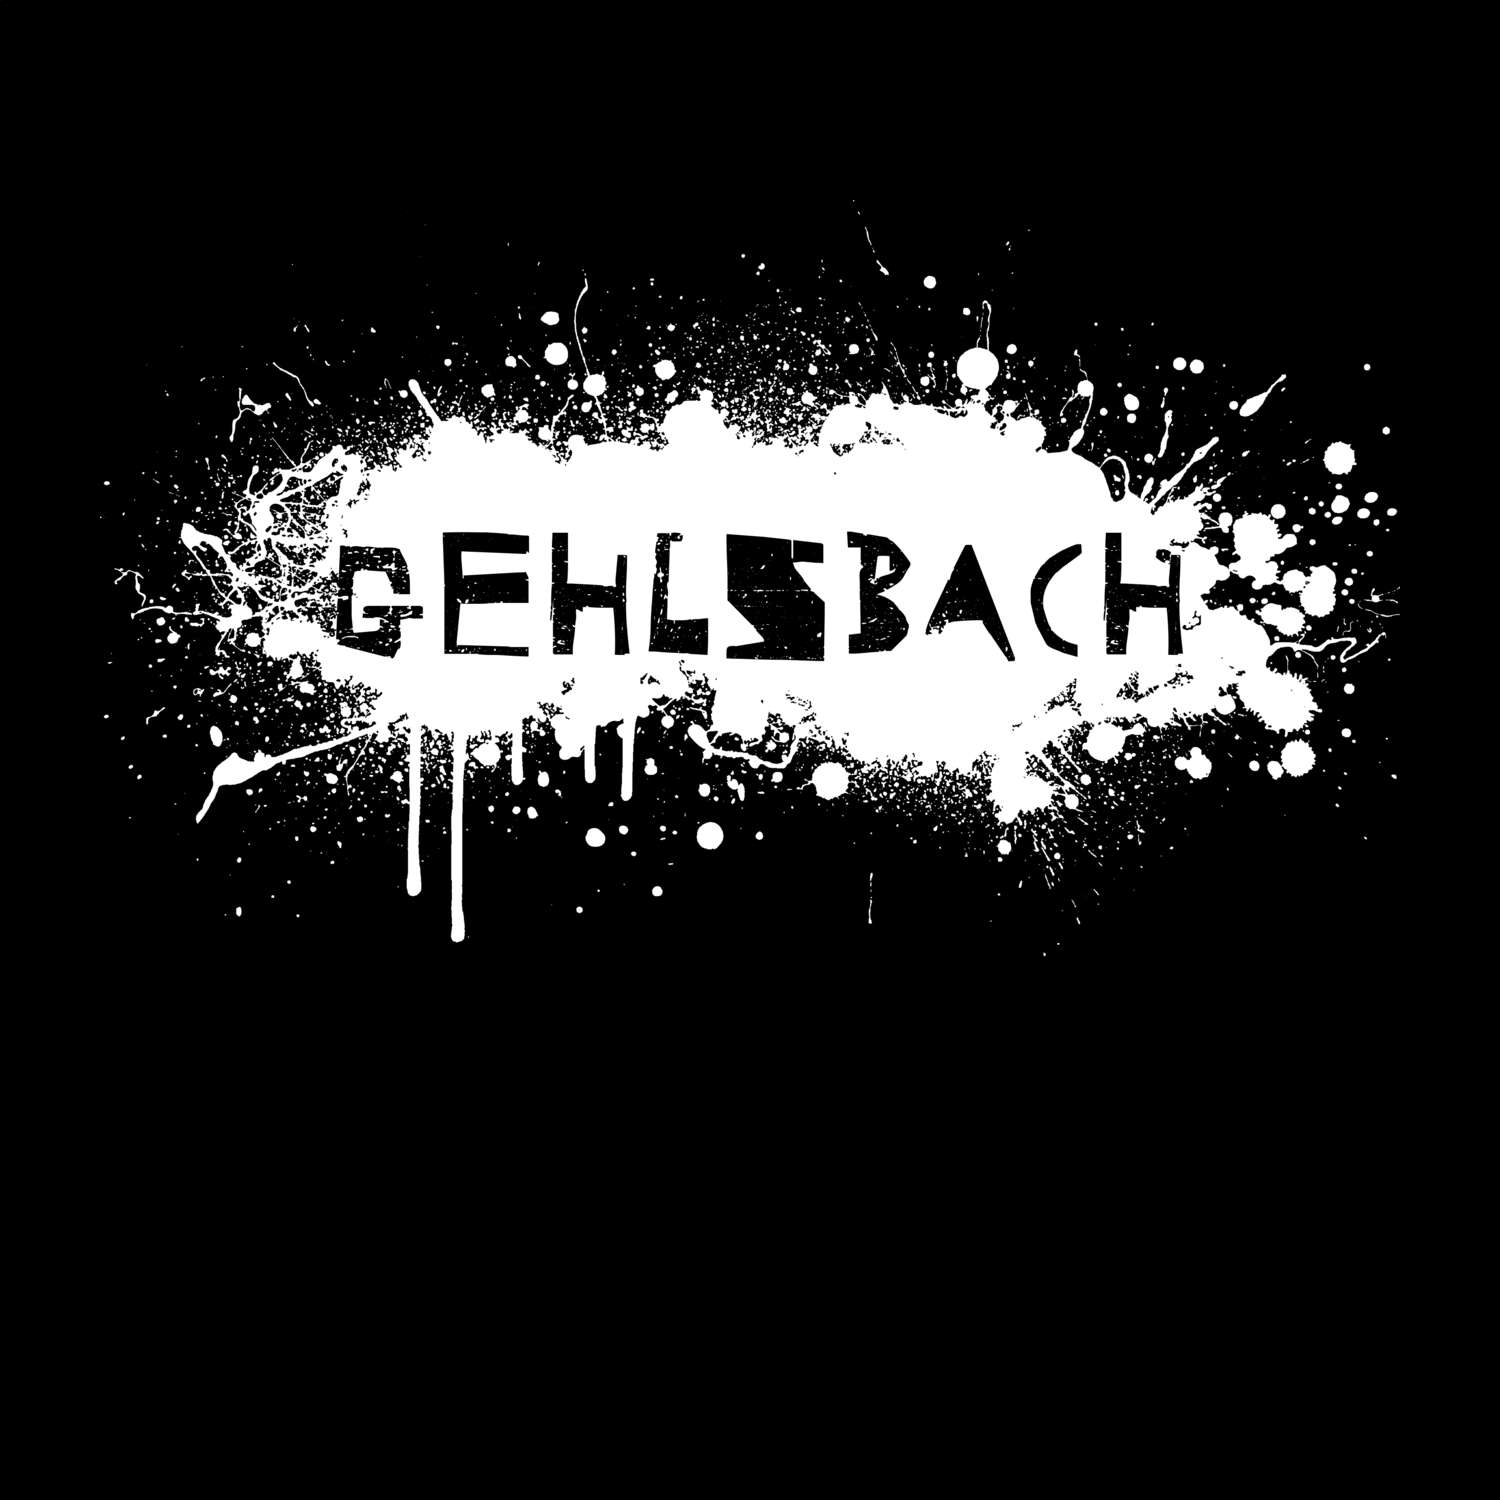 Gehlsbach T-Shirt »Paint Splash Punk«